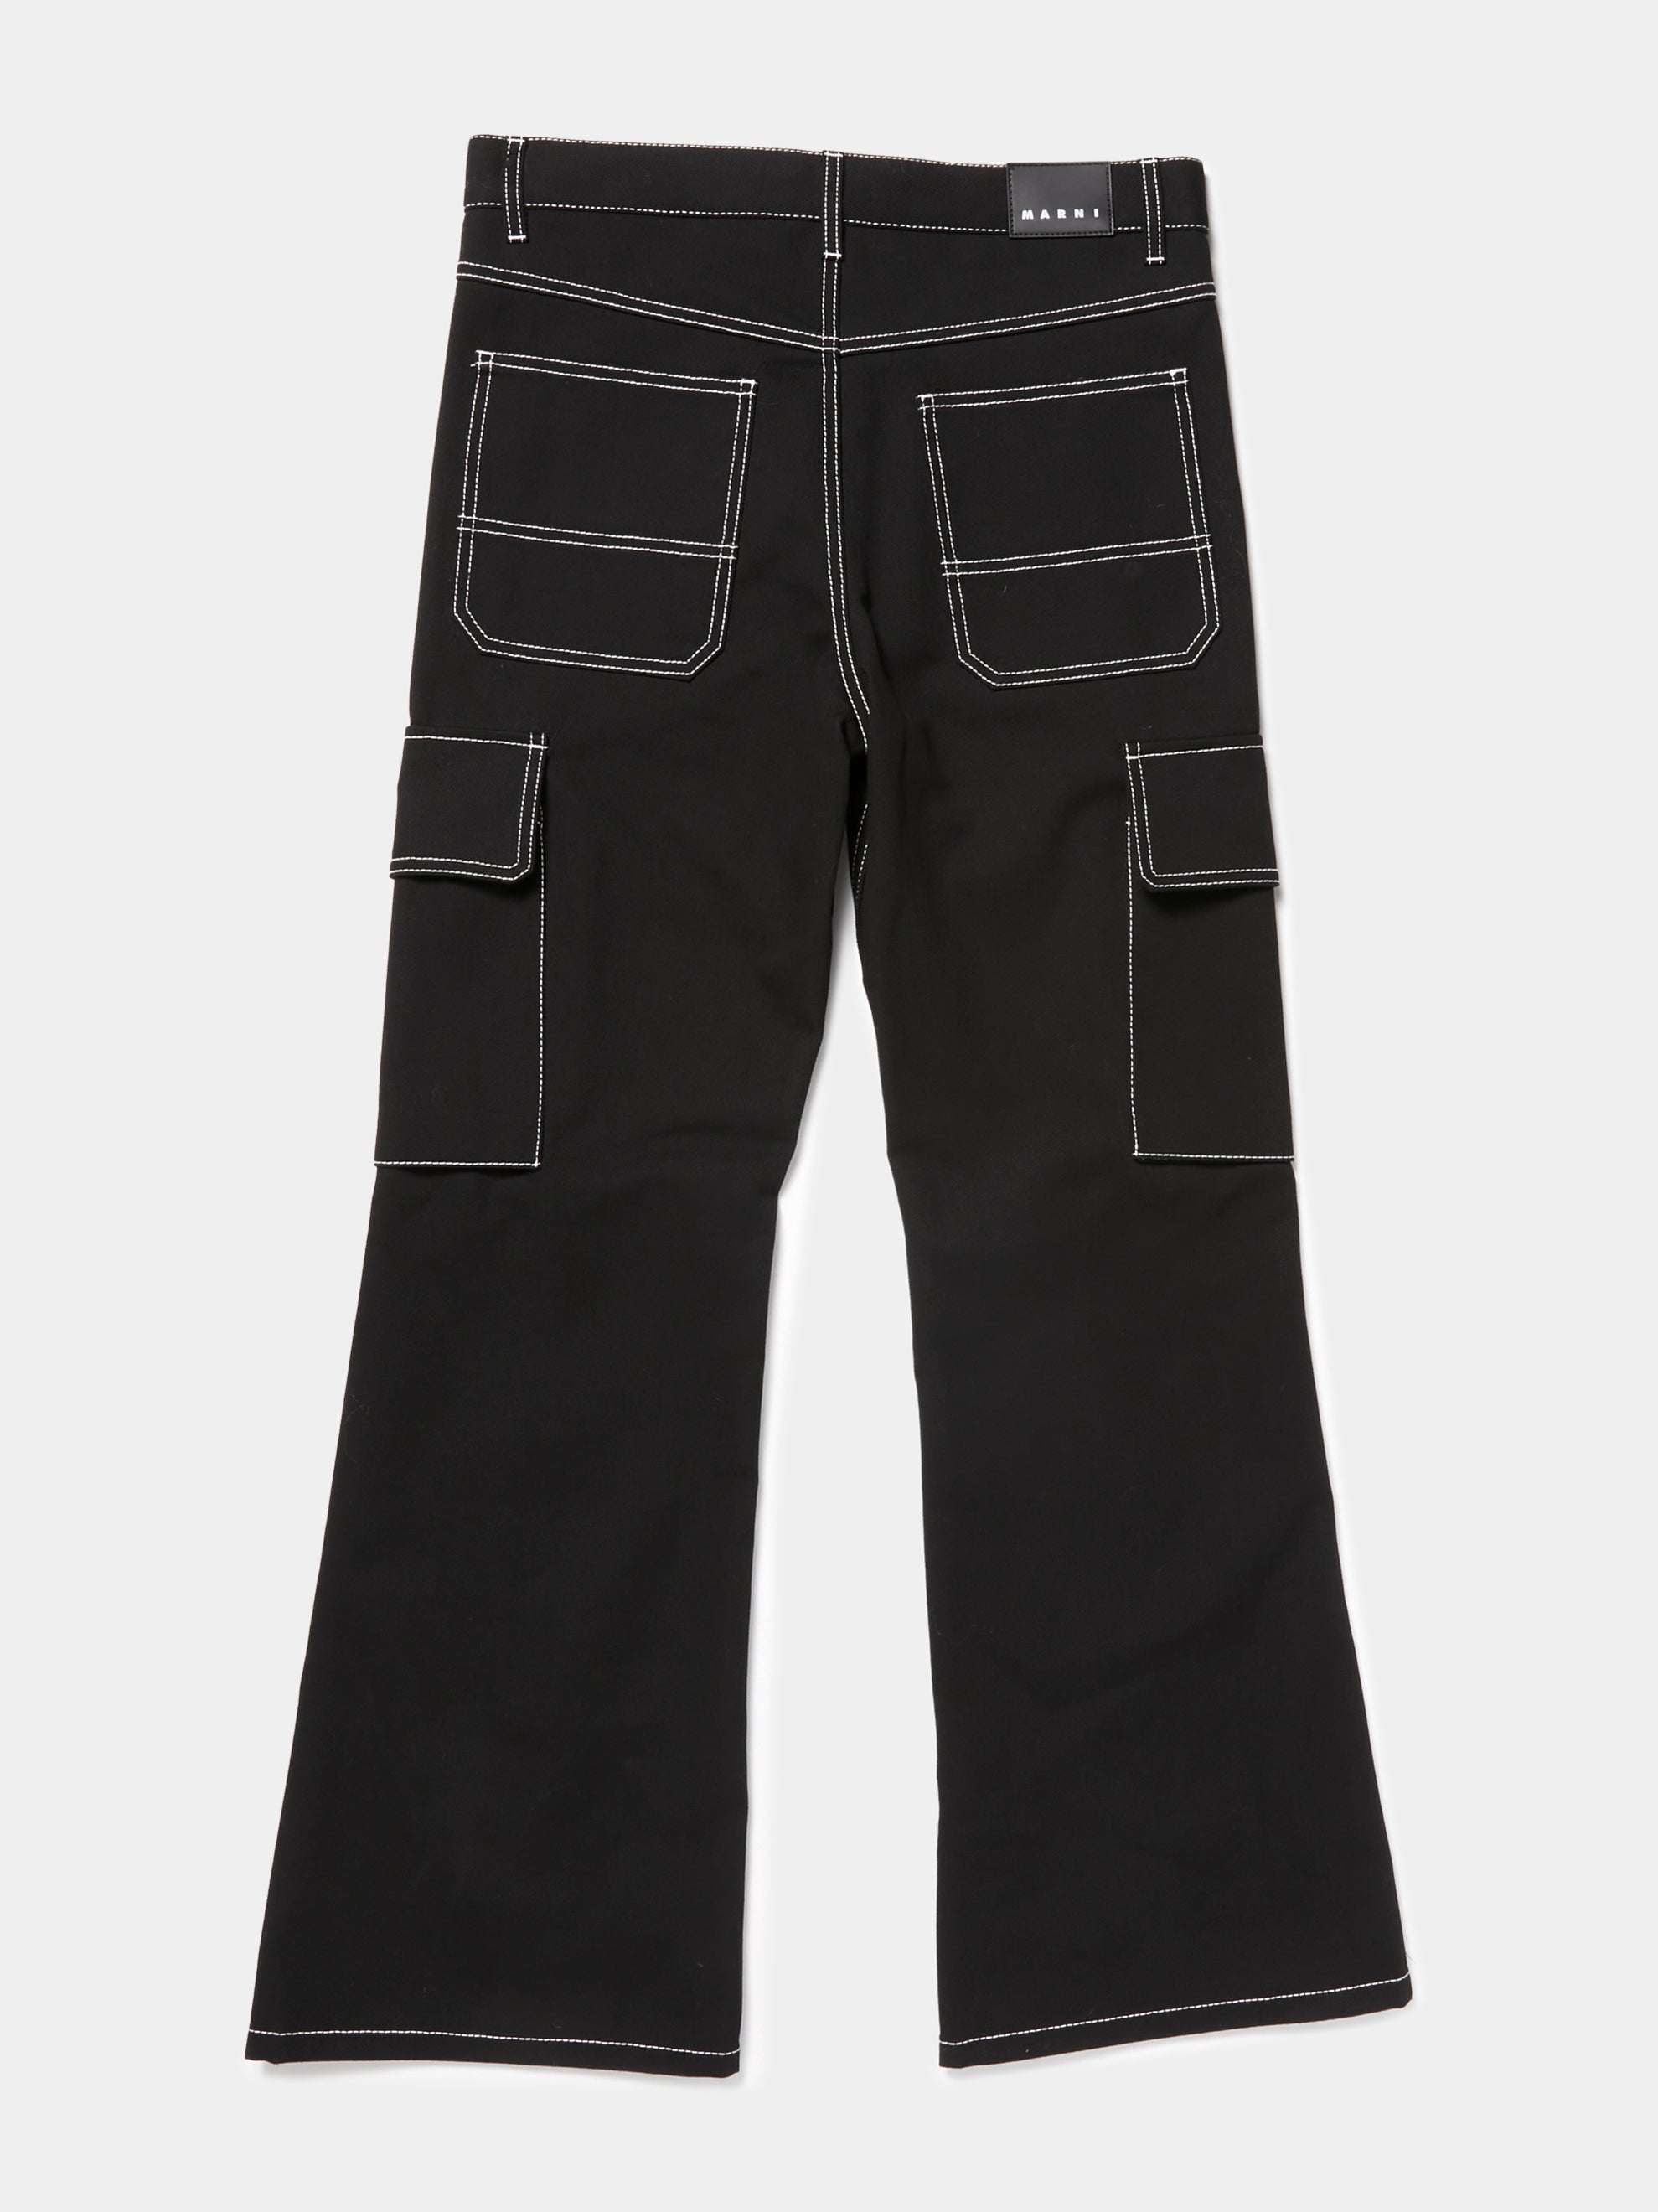 Contrast Stitch Cargo Pants (Black)